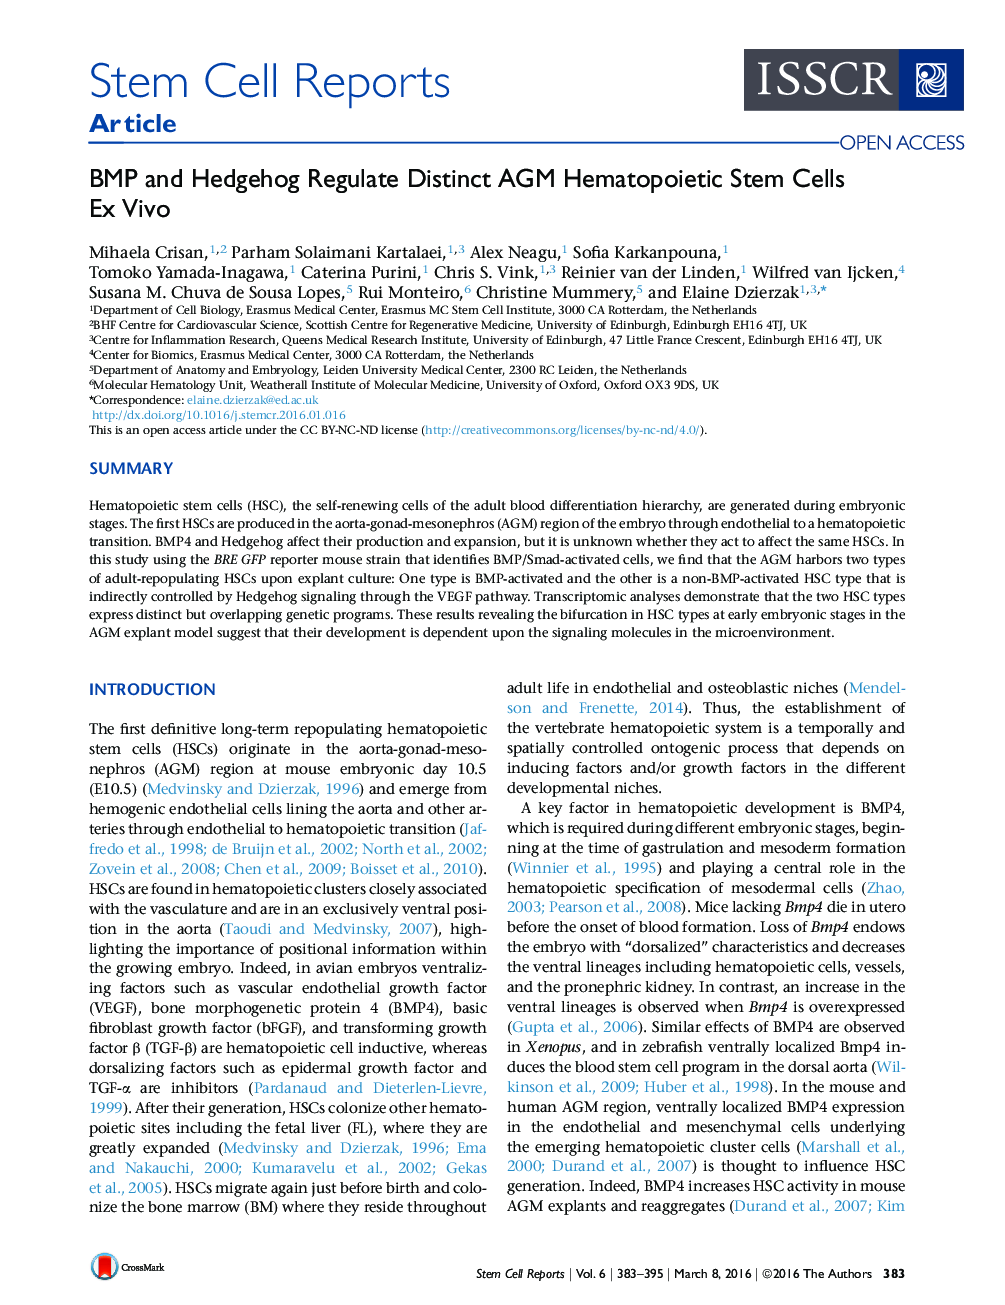 BMP and Hedgehog Regulate Distinct AGM Hematopoietic Stem Cells Ex Vivo 